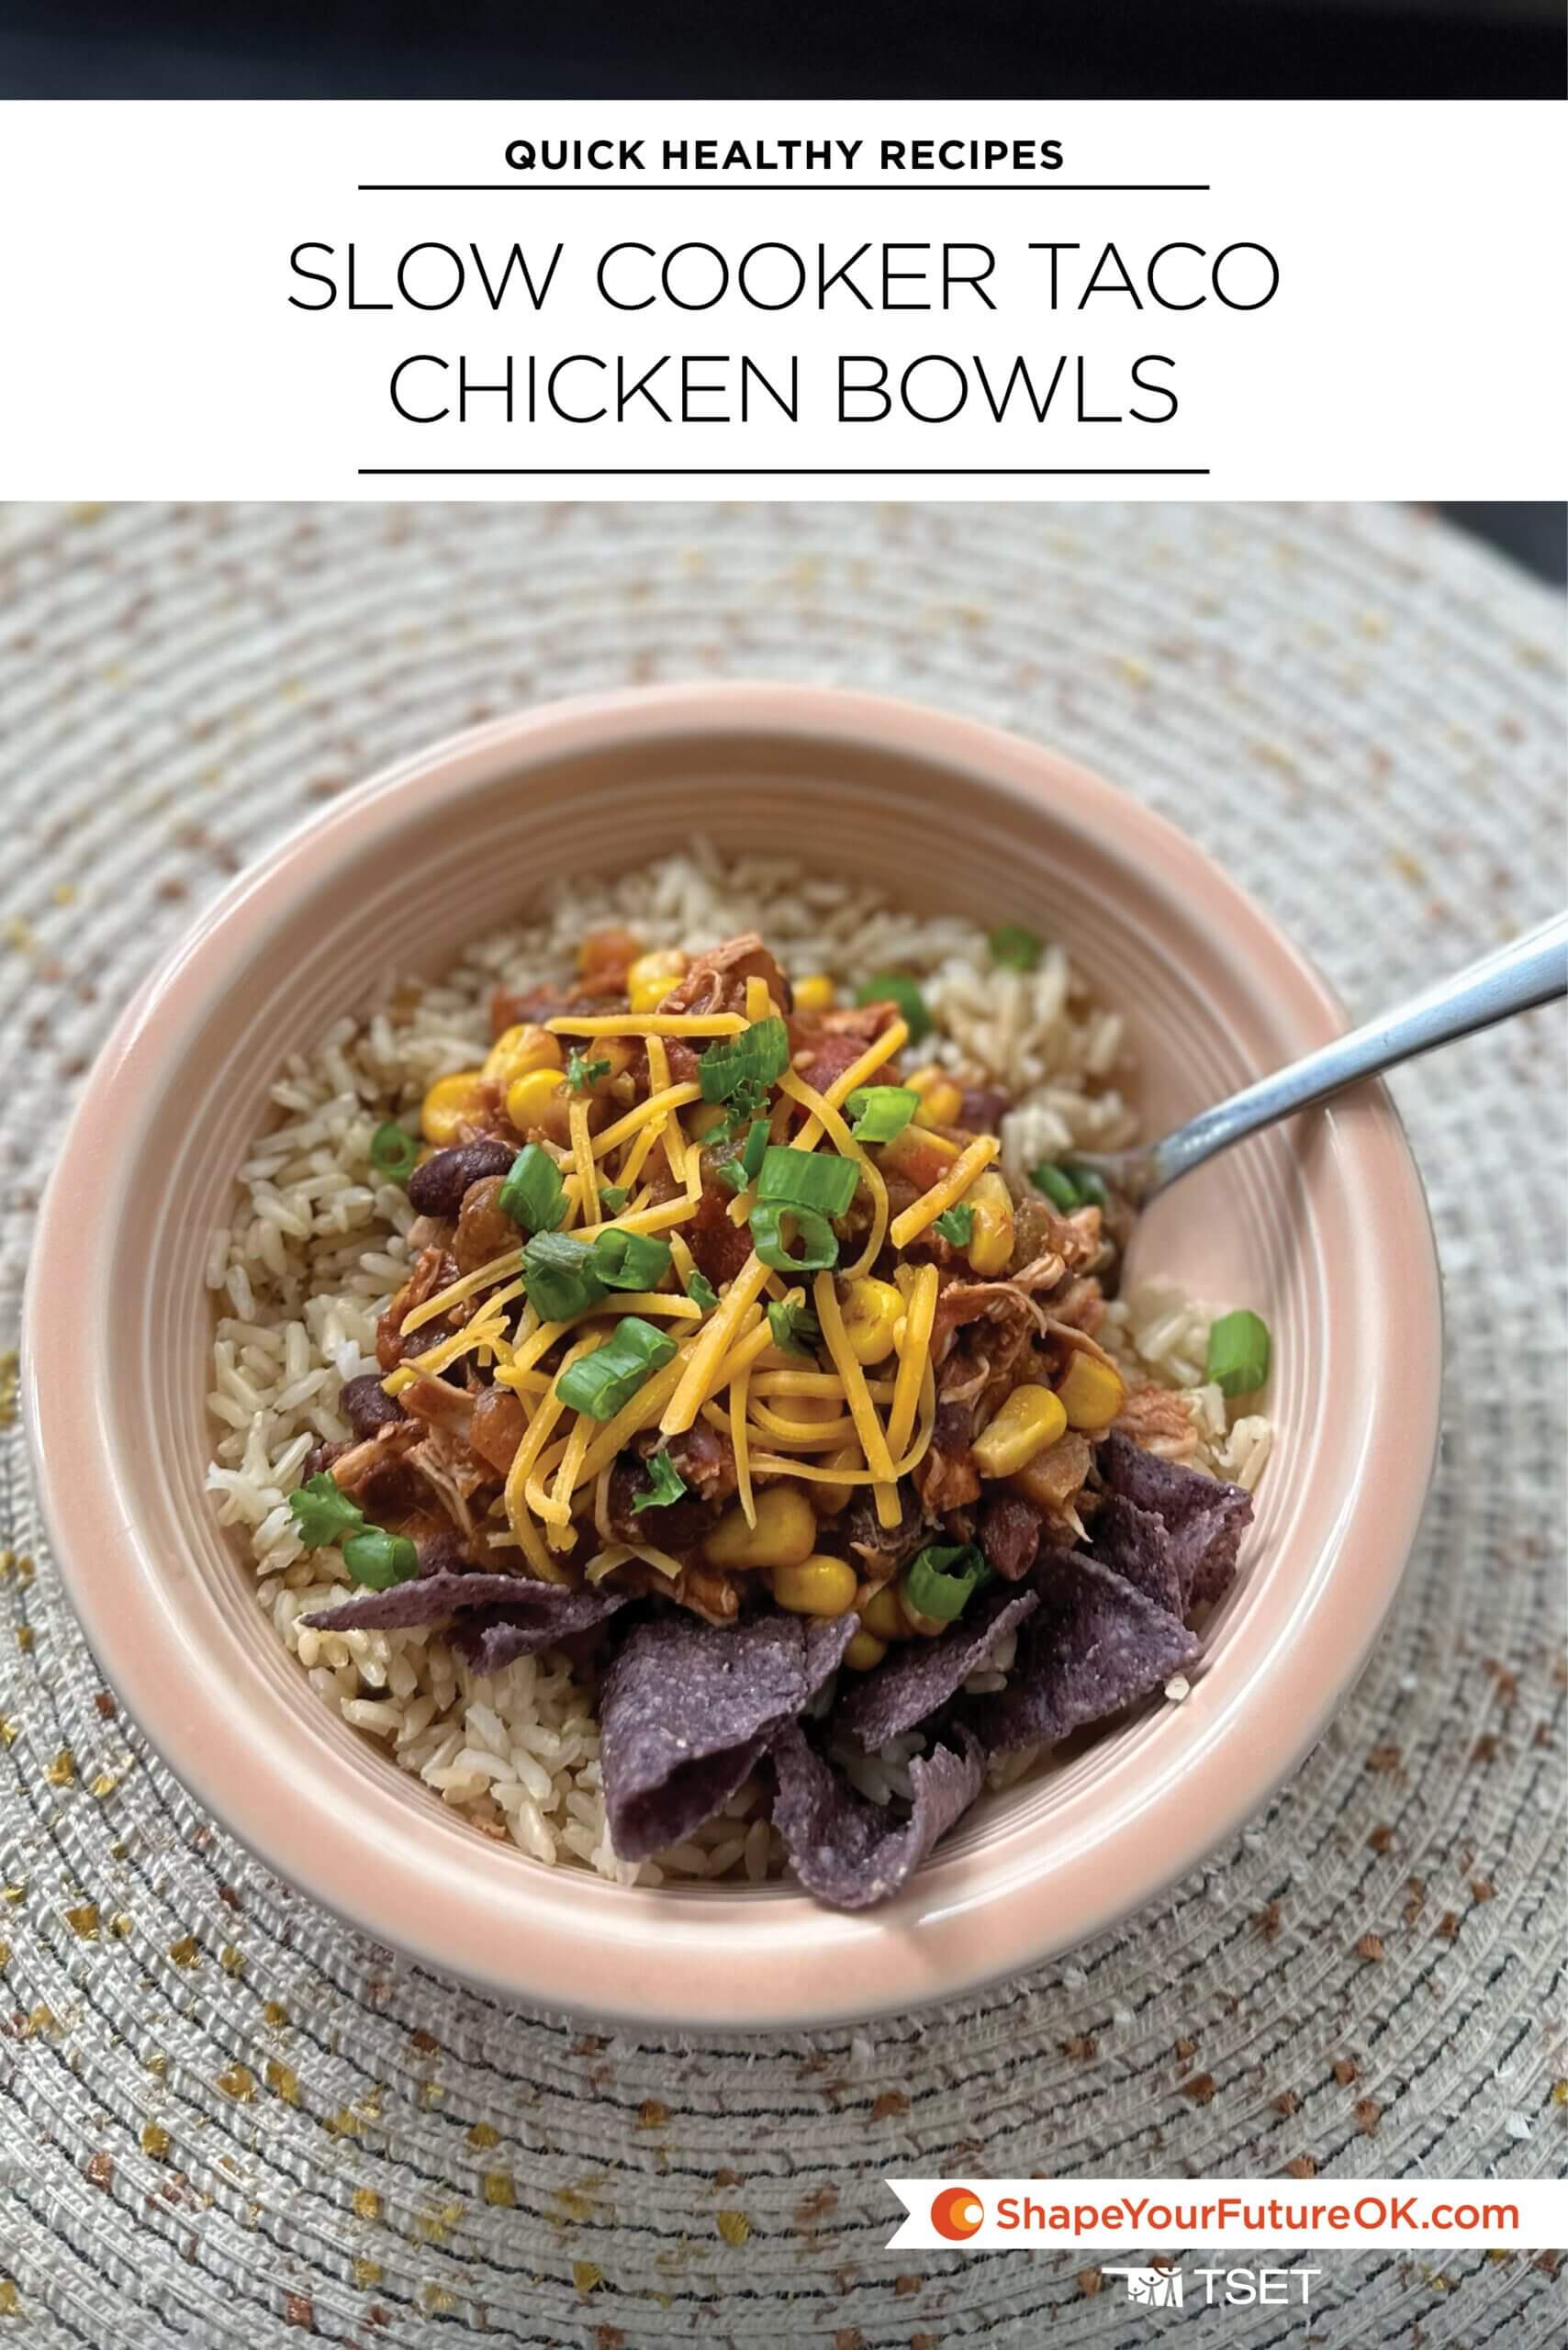 Taco Chicken Bowls recipe